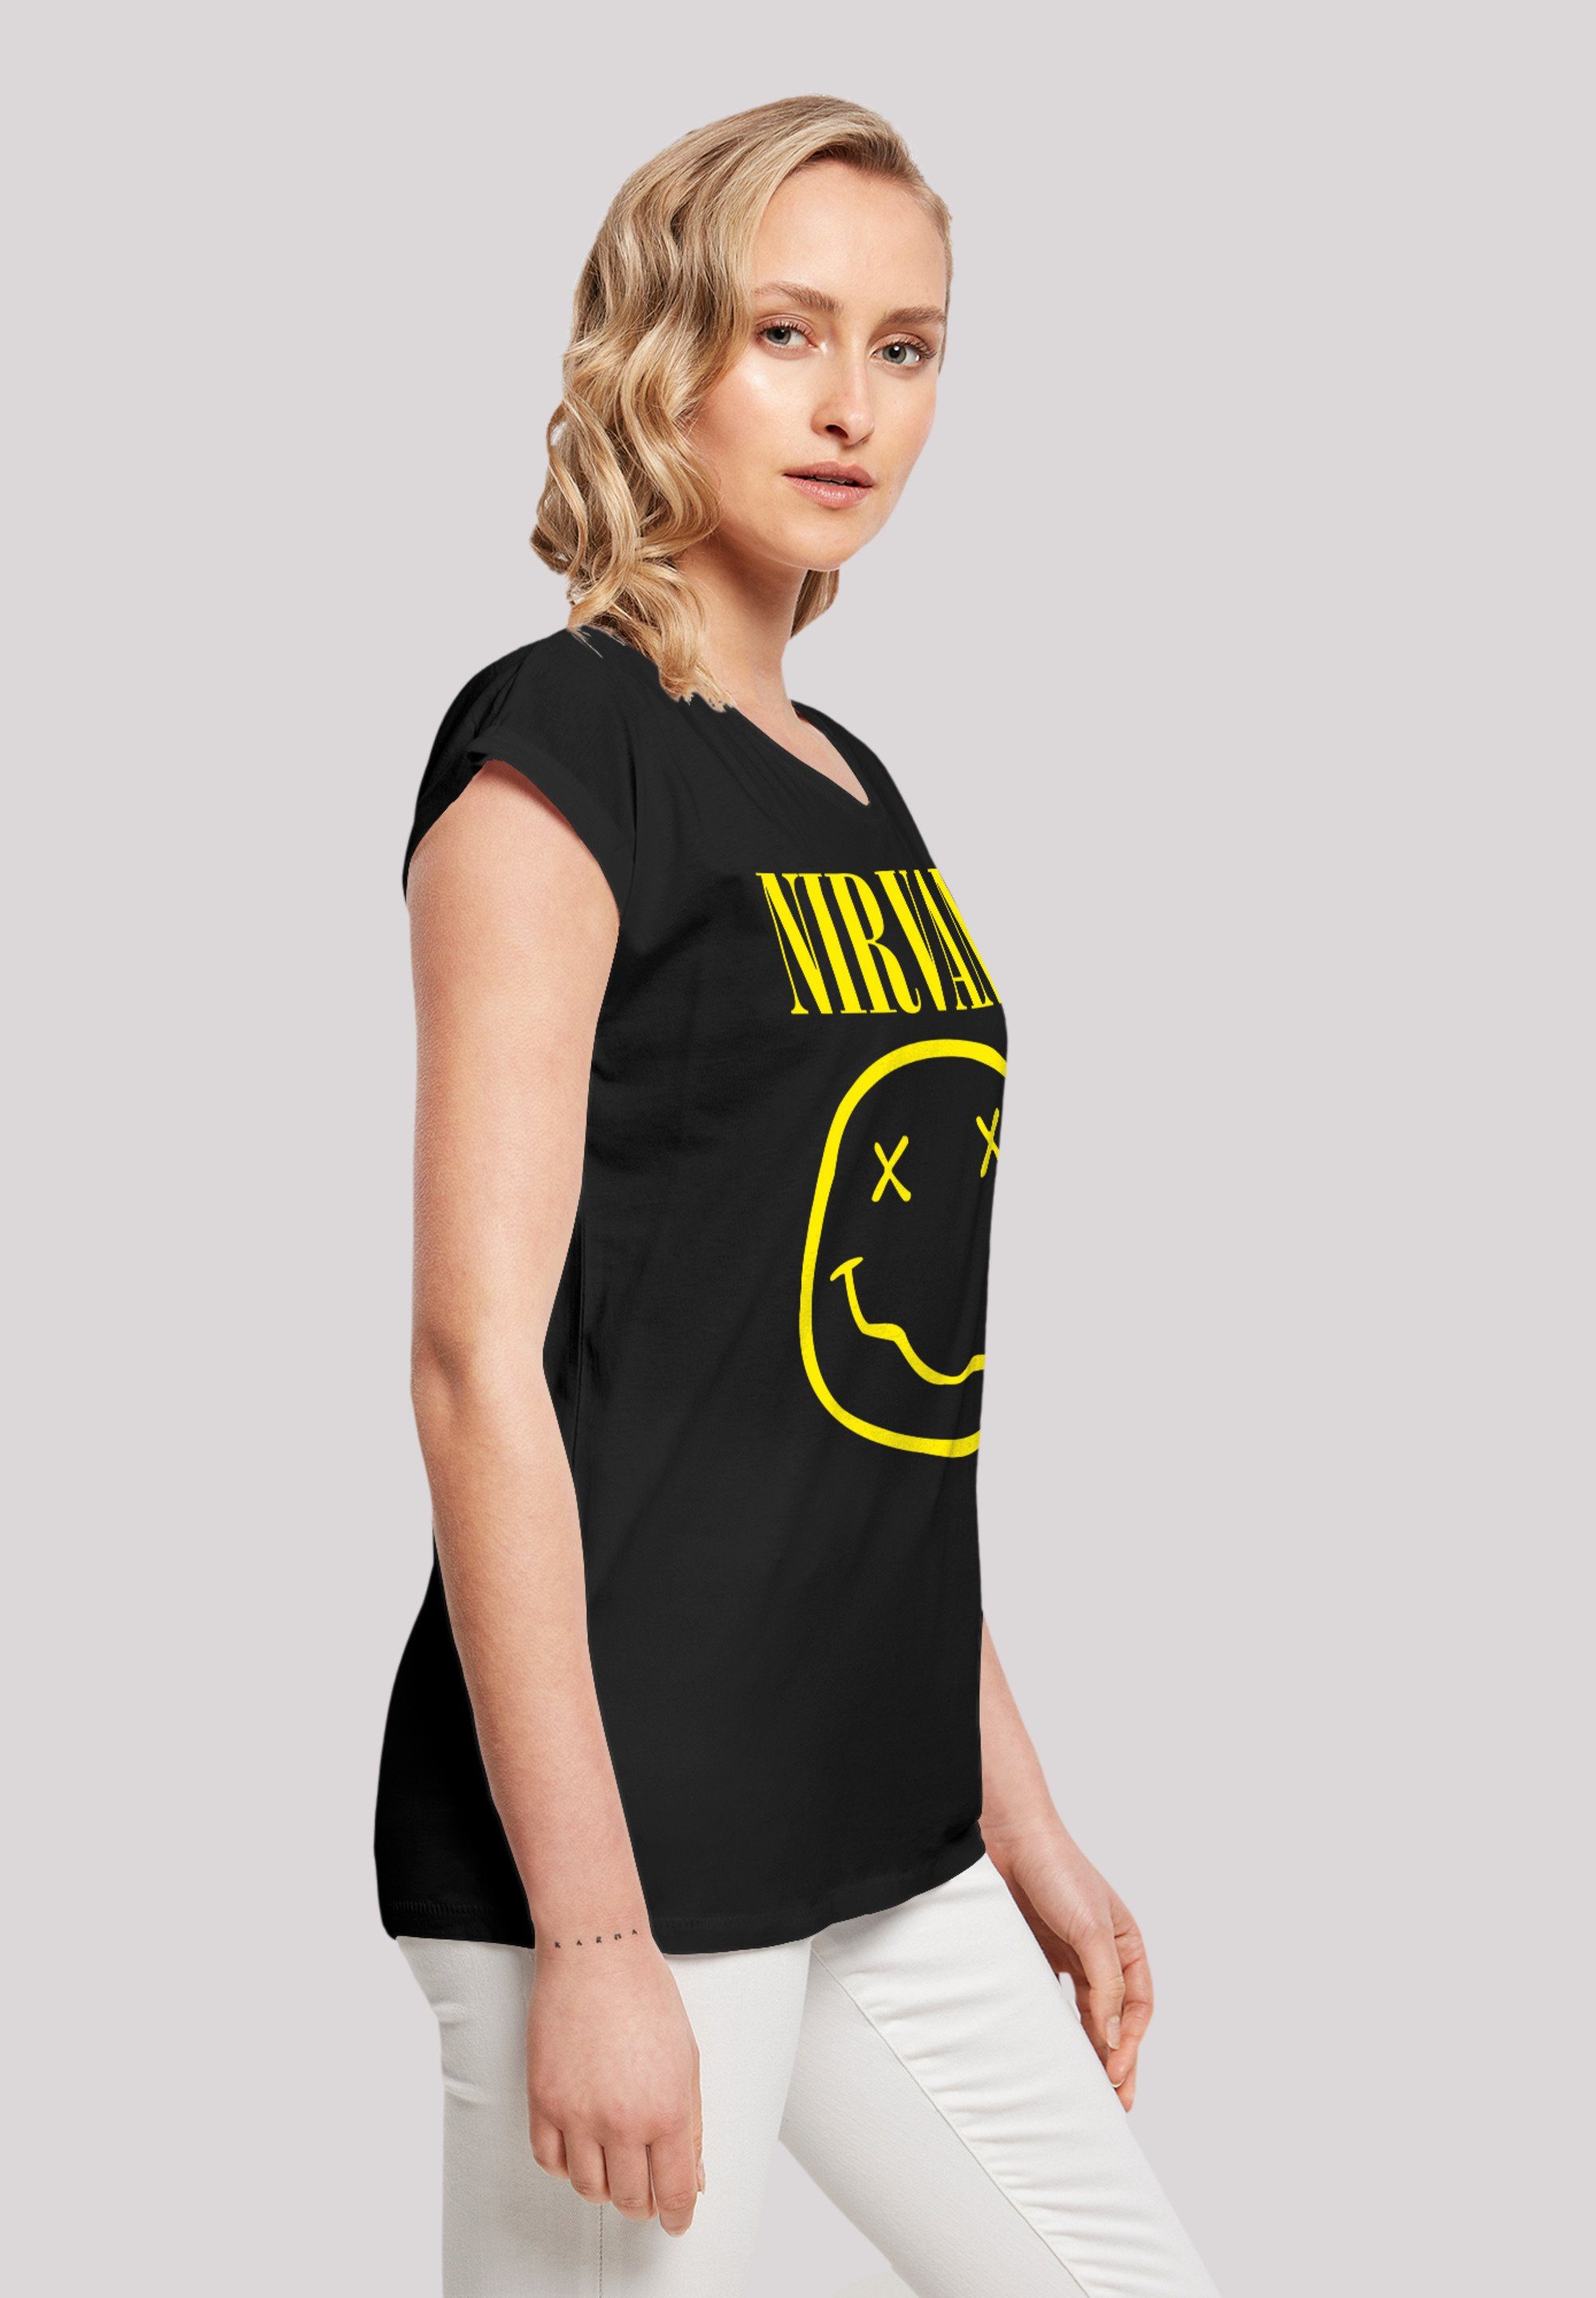 Nirvana F4NT4STIC Yellow Happy Qualität T-Shirt Rock Band Face Premium schwarz